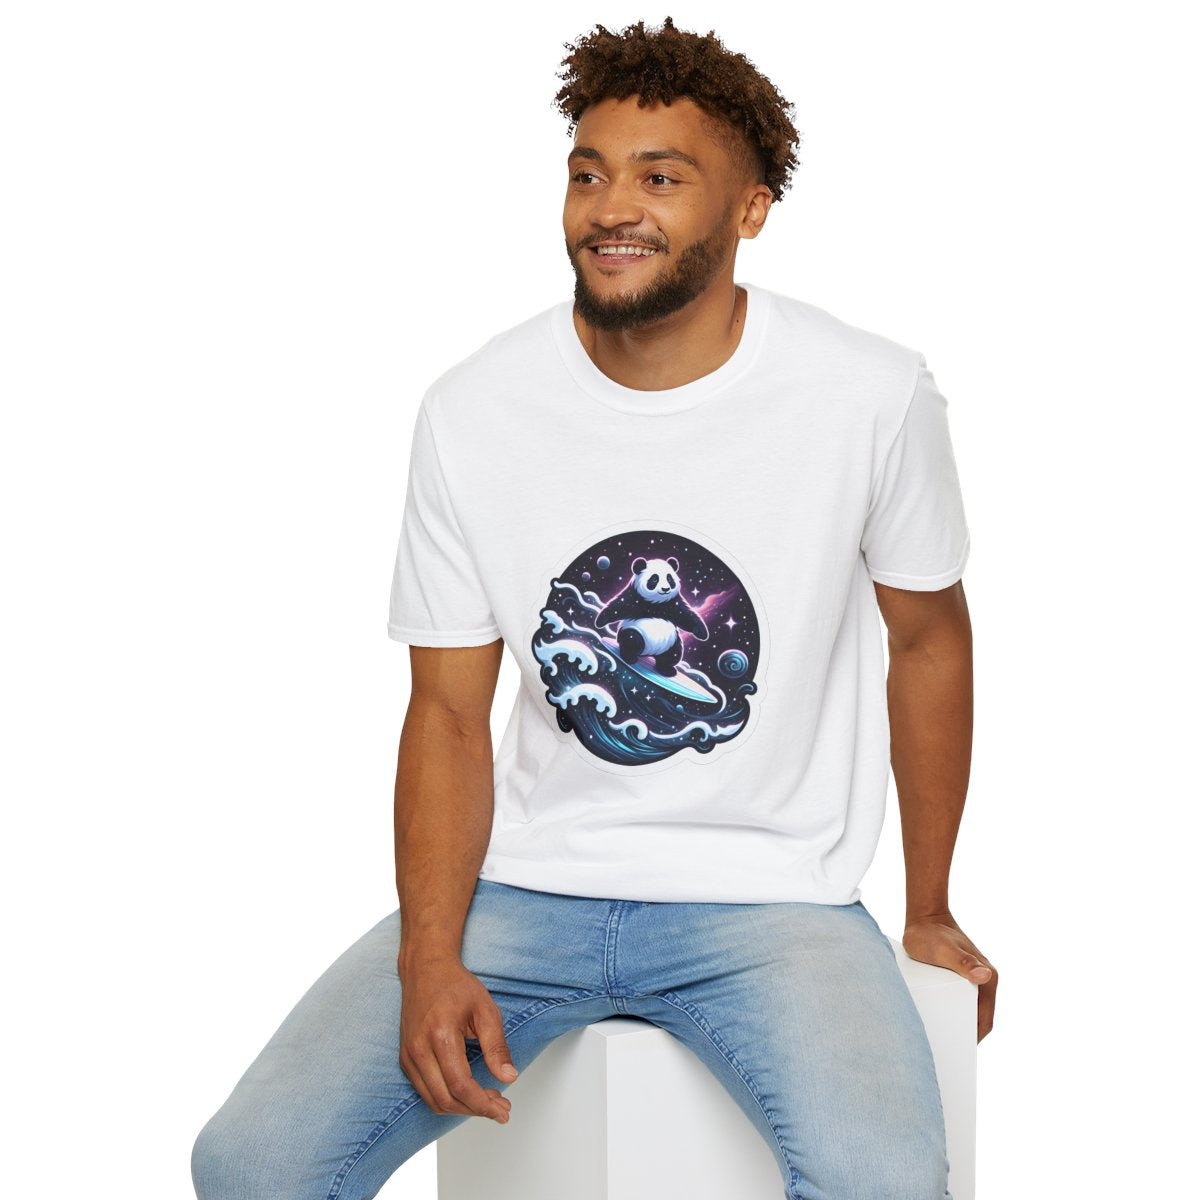 Digital Art T-Shirt - Magical Panda Surfing in space - Digital Art Style T-Shirt